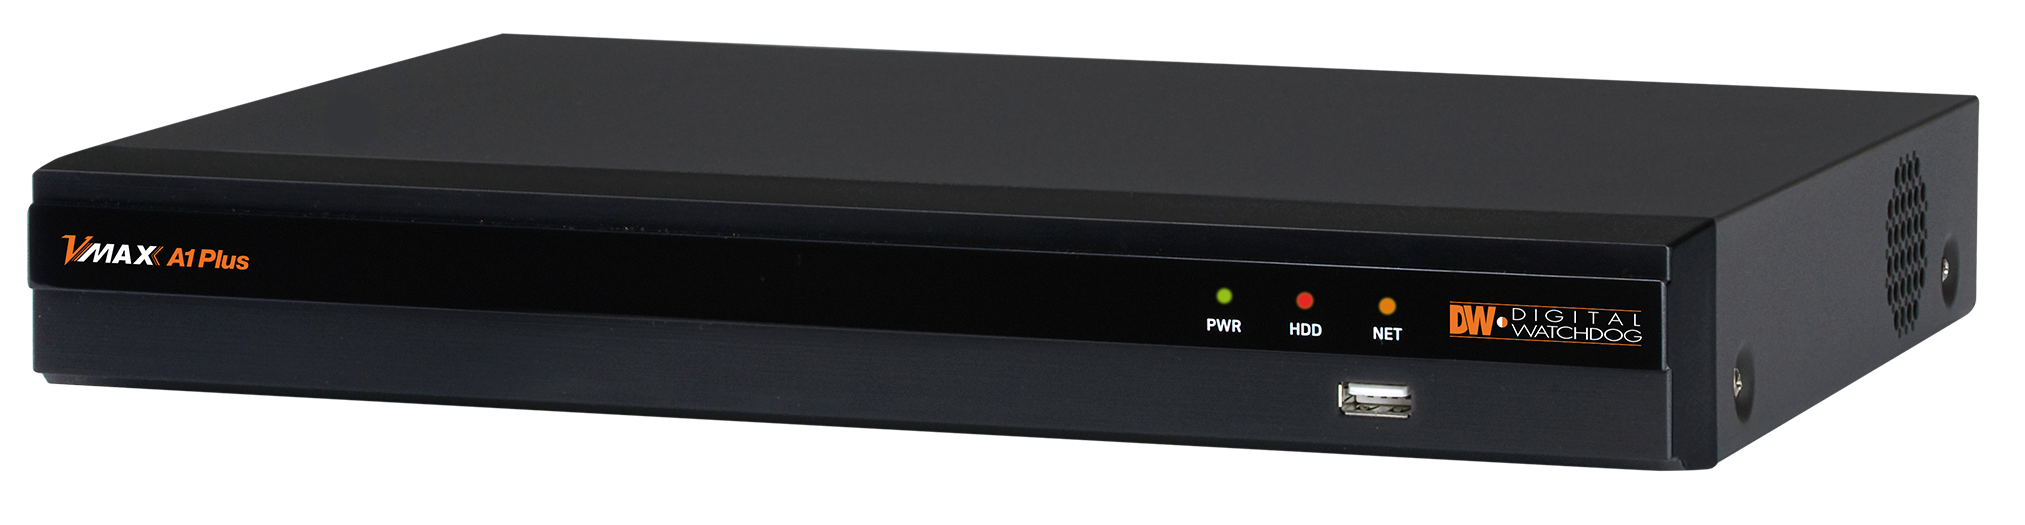 Digital Watchdog DW-VA1P88T  UHDoC - DVR 8ch 8 Channel Universal HD Over Coax DVR